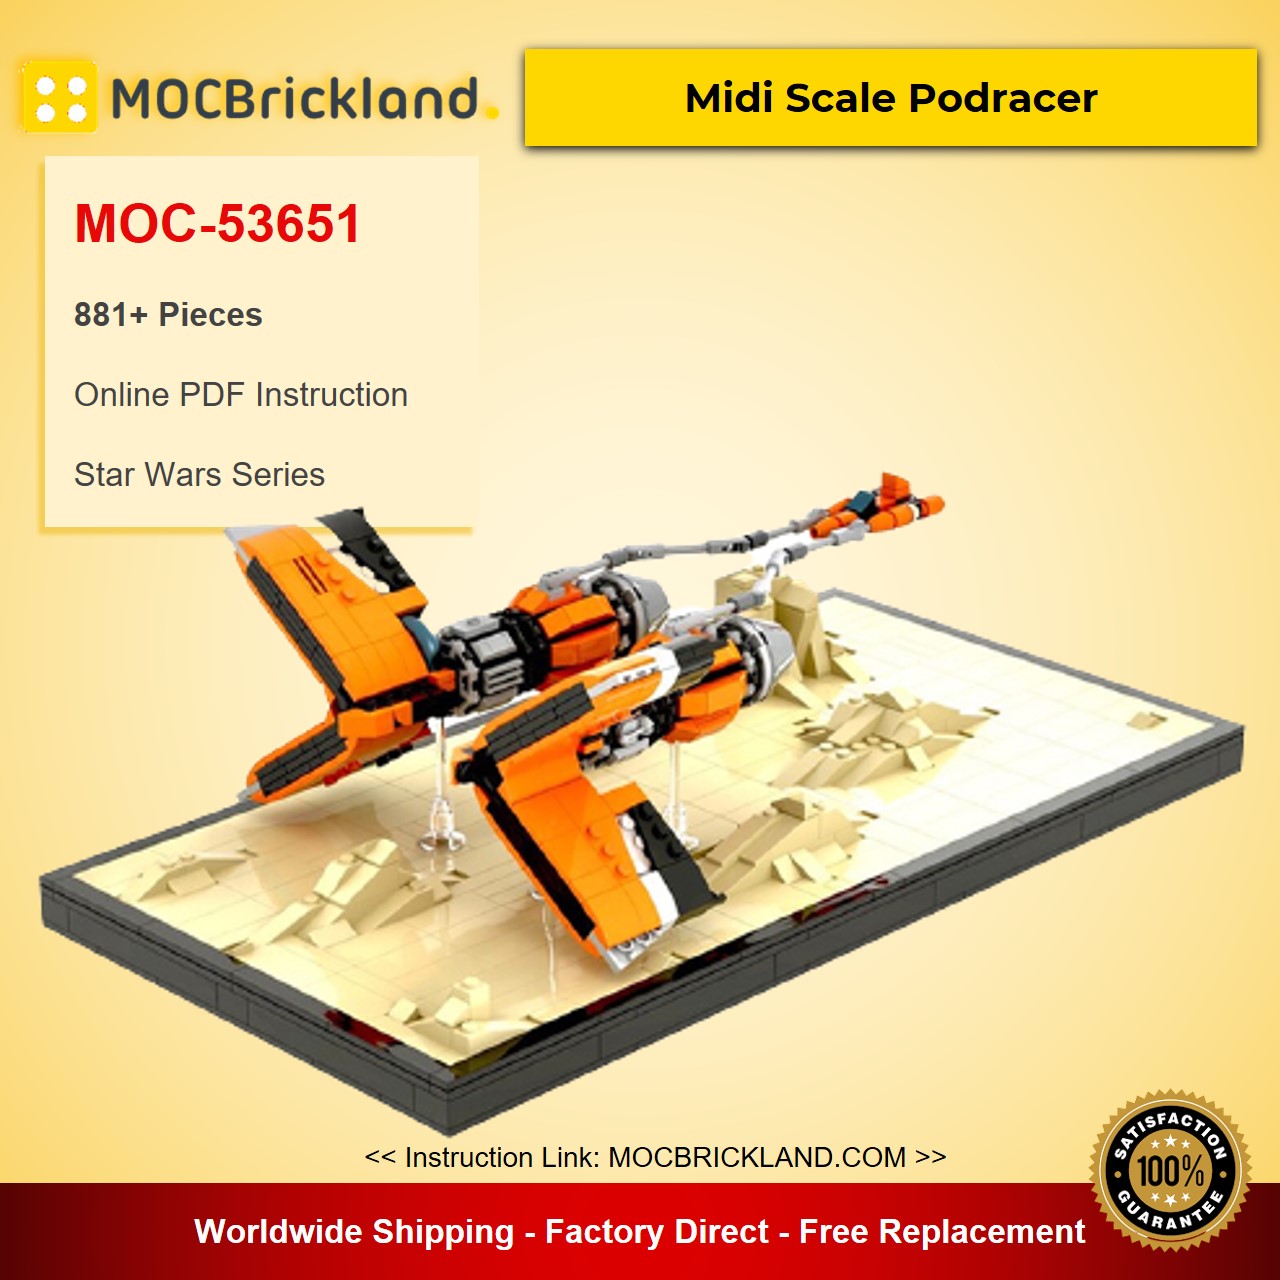 MOCBRICKLAND MOC-53651 Midi Scale Podracer